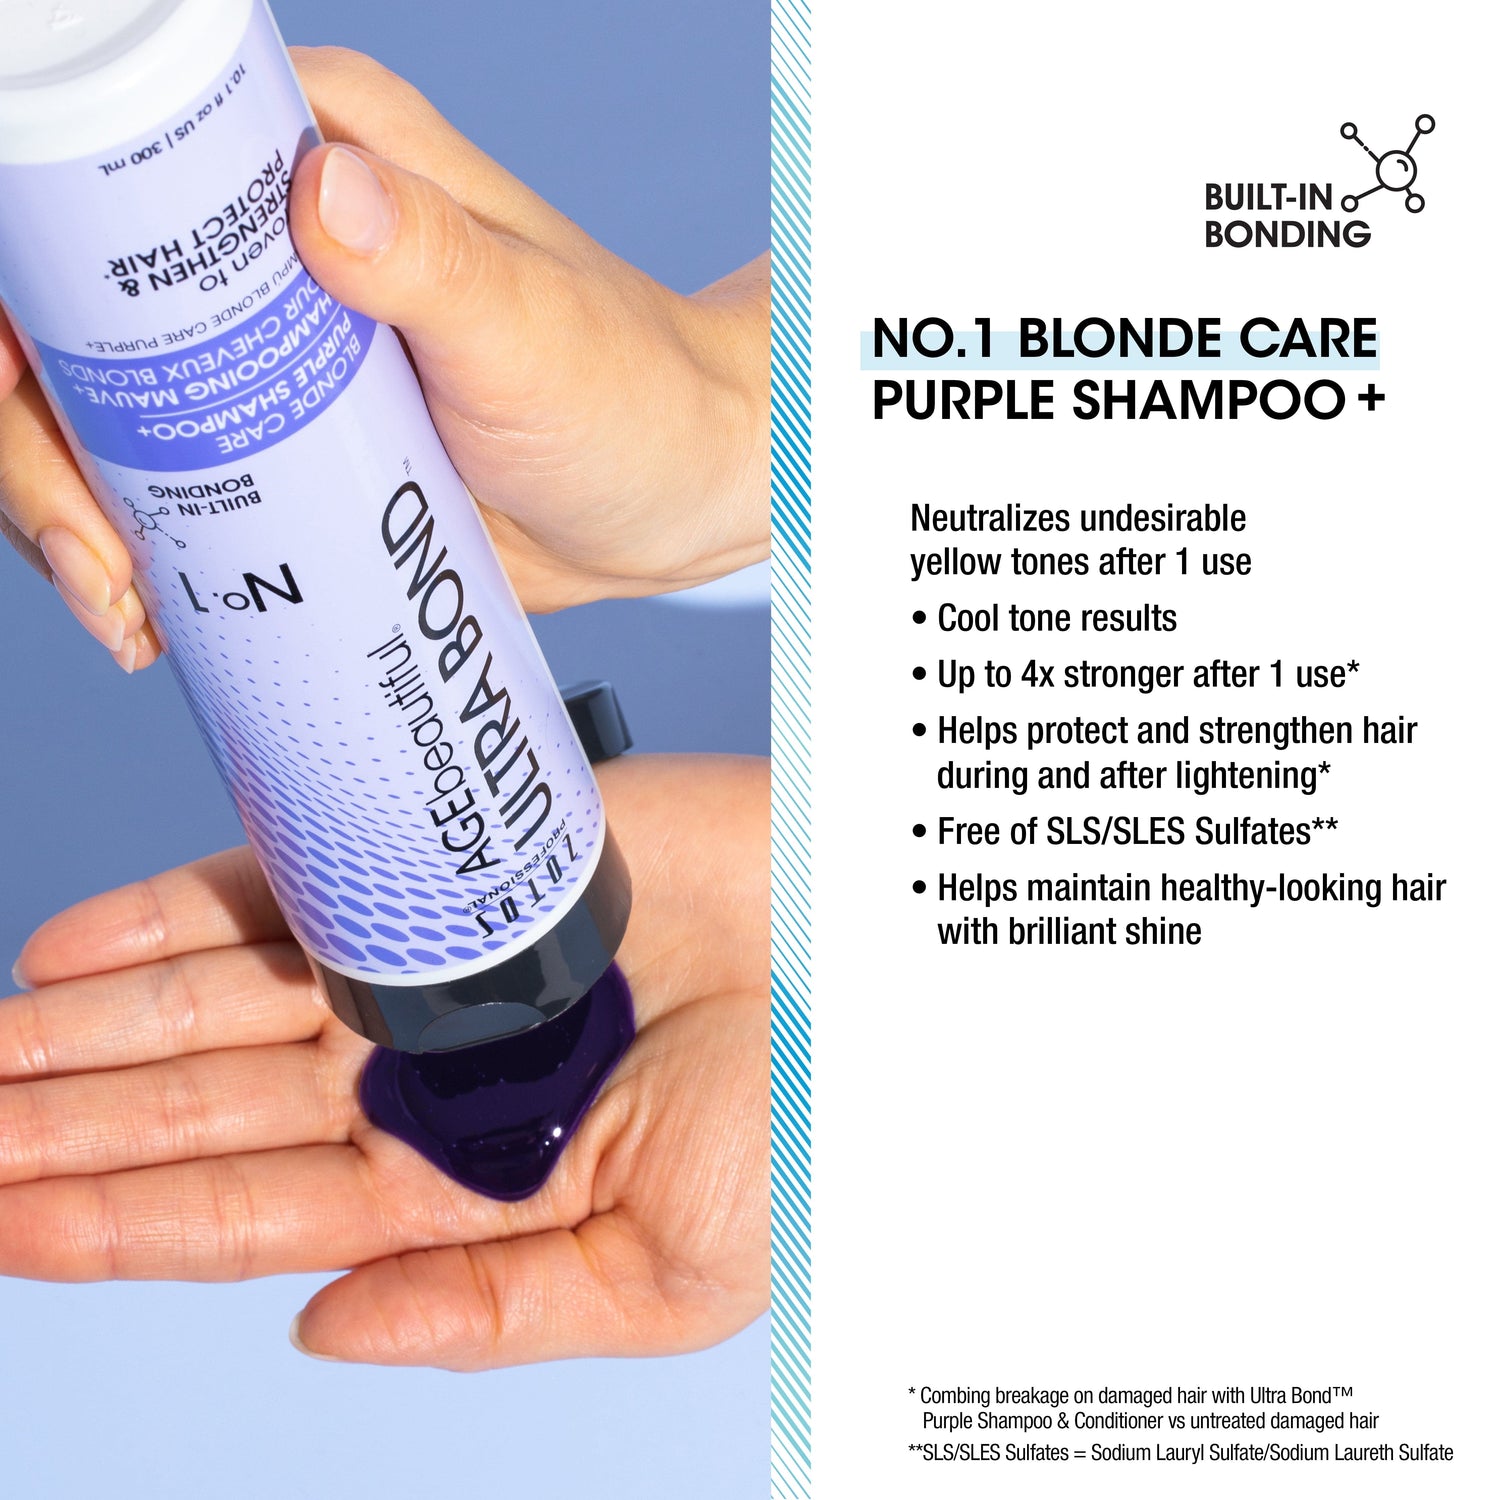 AGEbeautiful® Ultra Bond ™ No. 1 Blonde Care Purple Shampoo+ product image with description text.